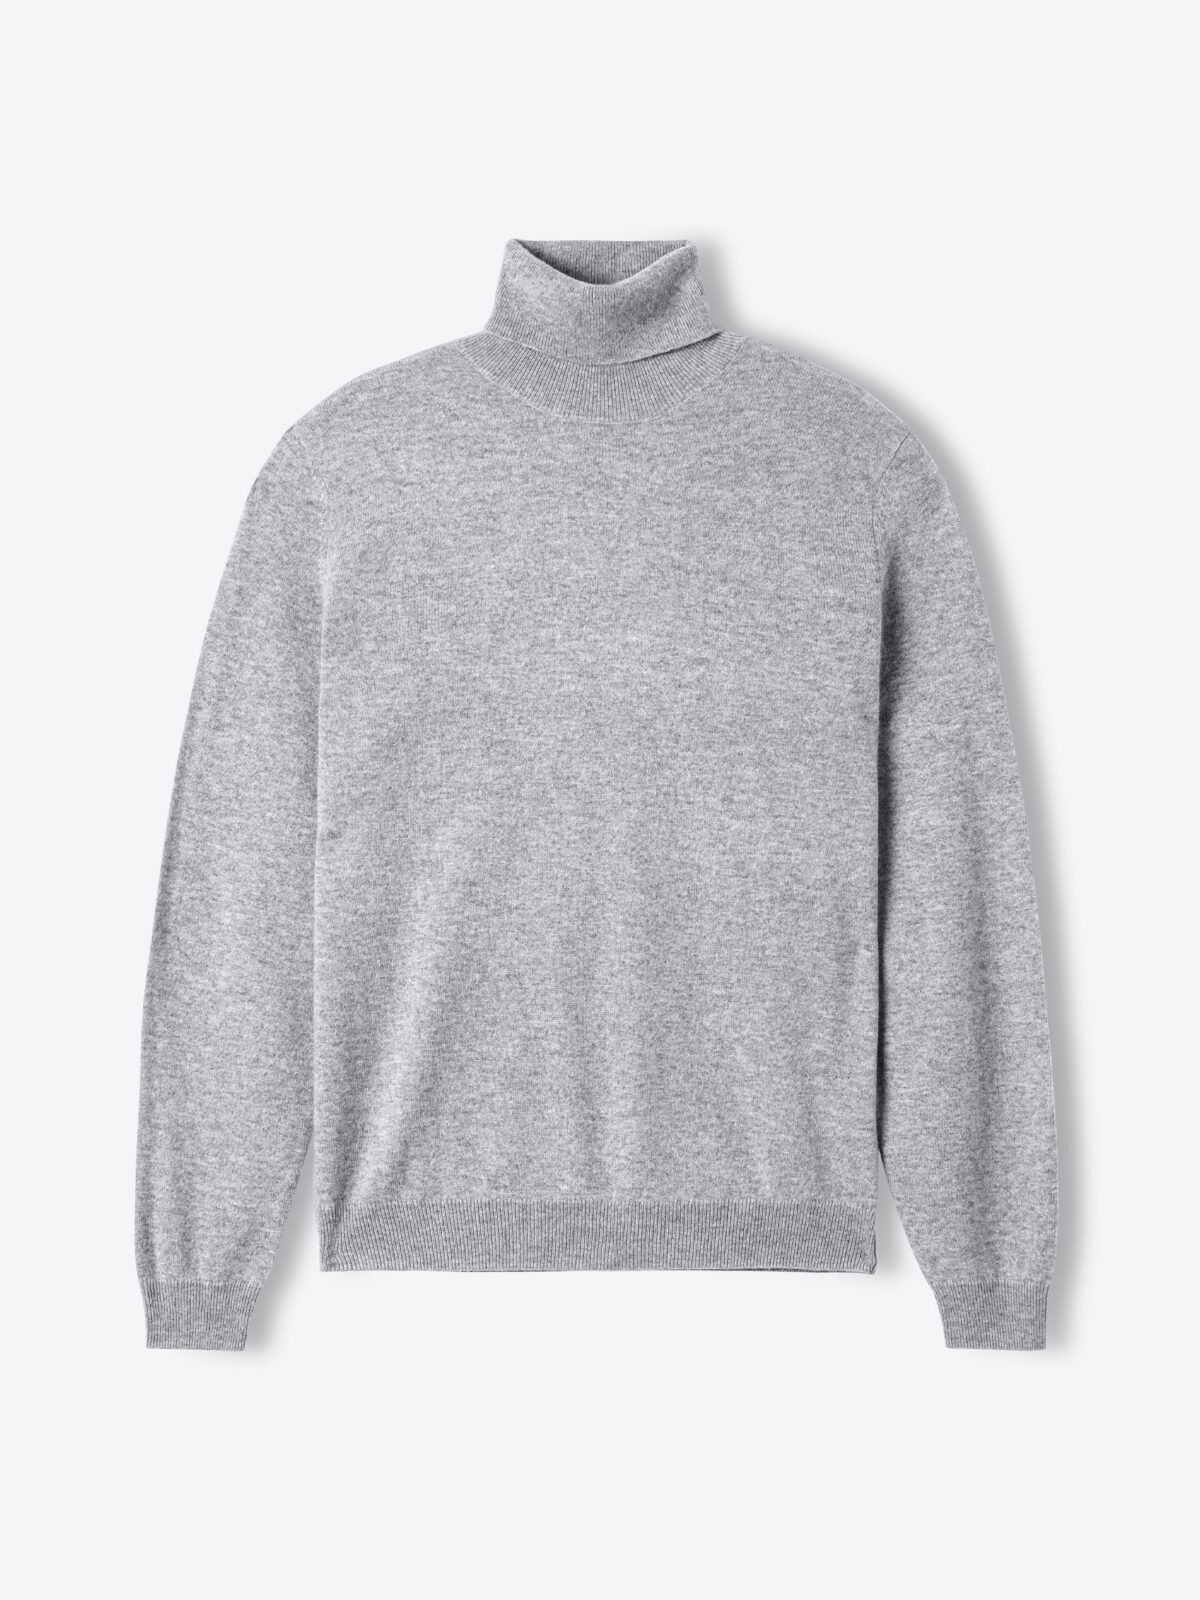 Light Grey Cashmere Turtleneck Sweater by Proper Cloth